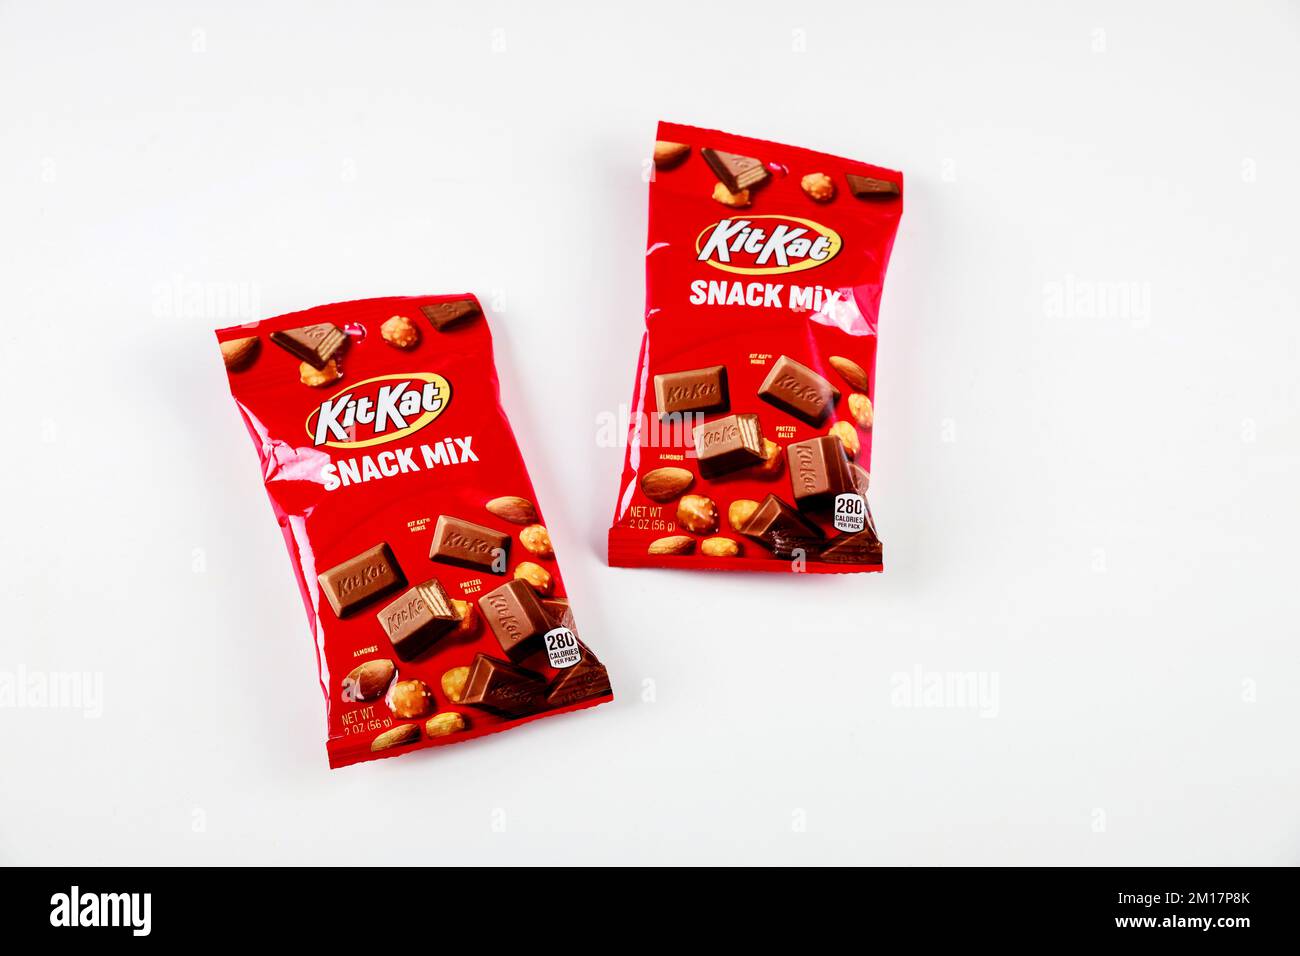 Food Science Japan: Nestle KitKat Big Little Chocolate Balls